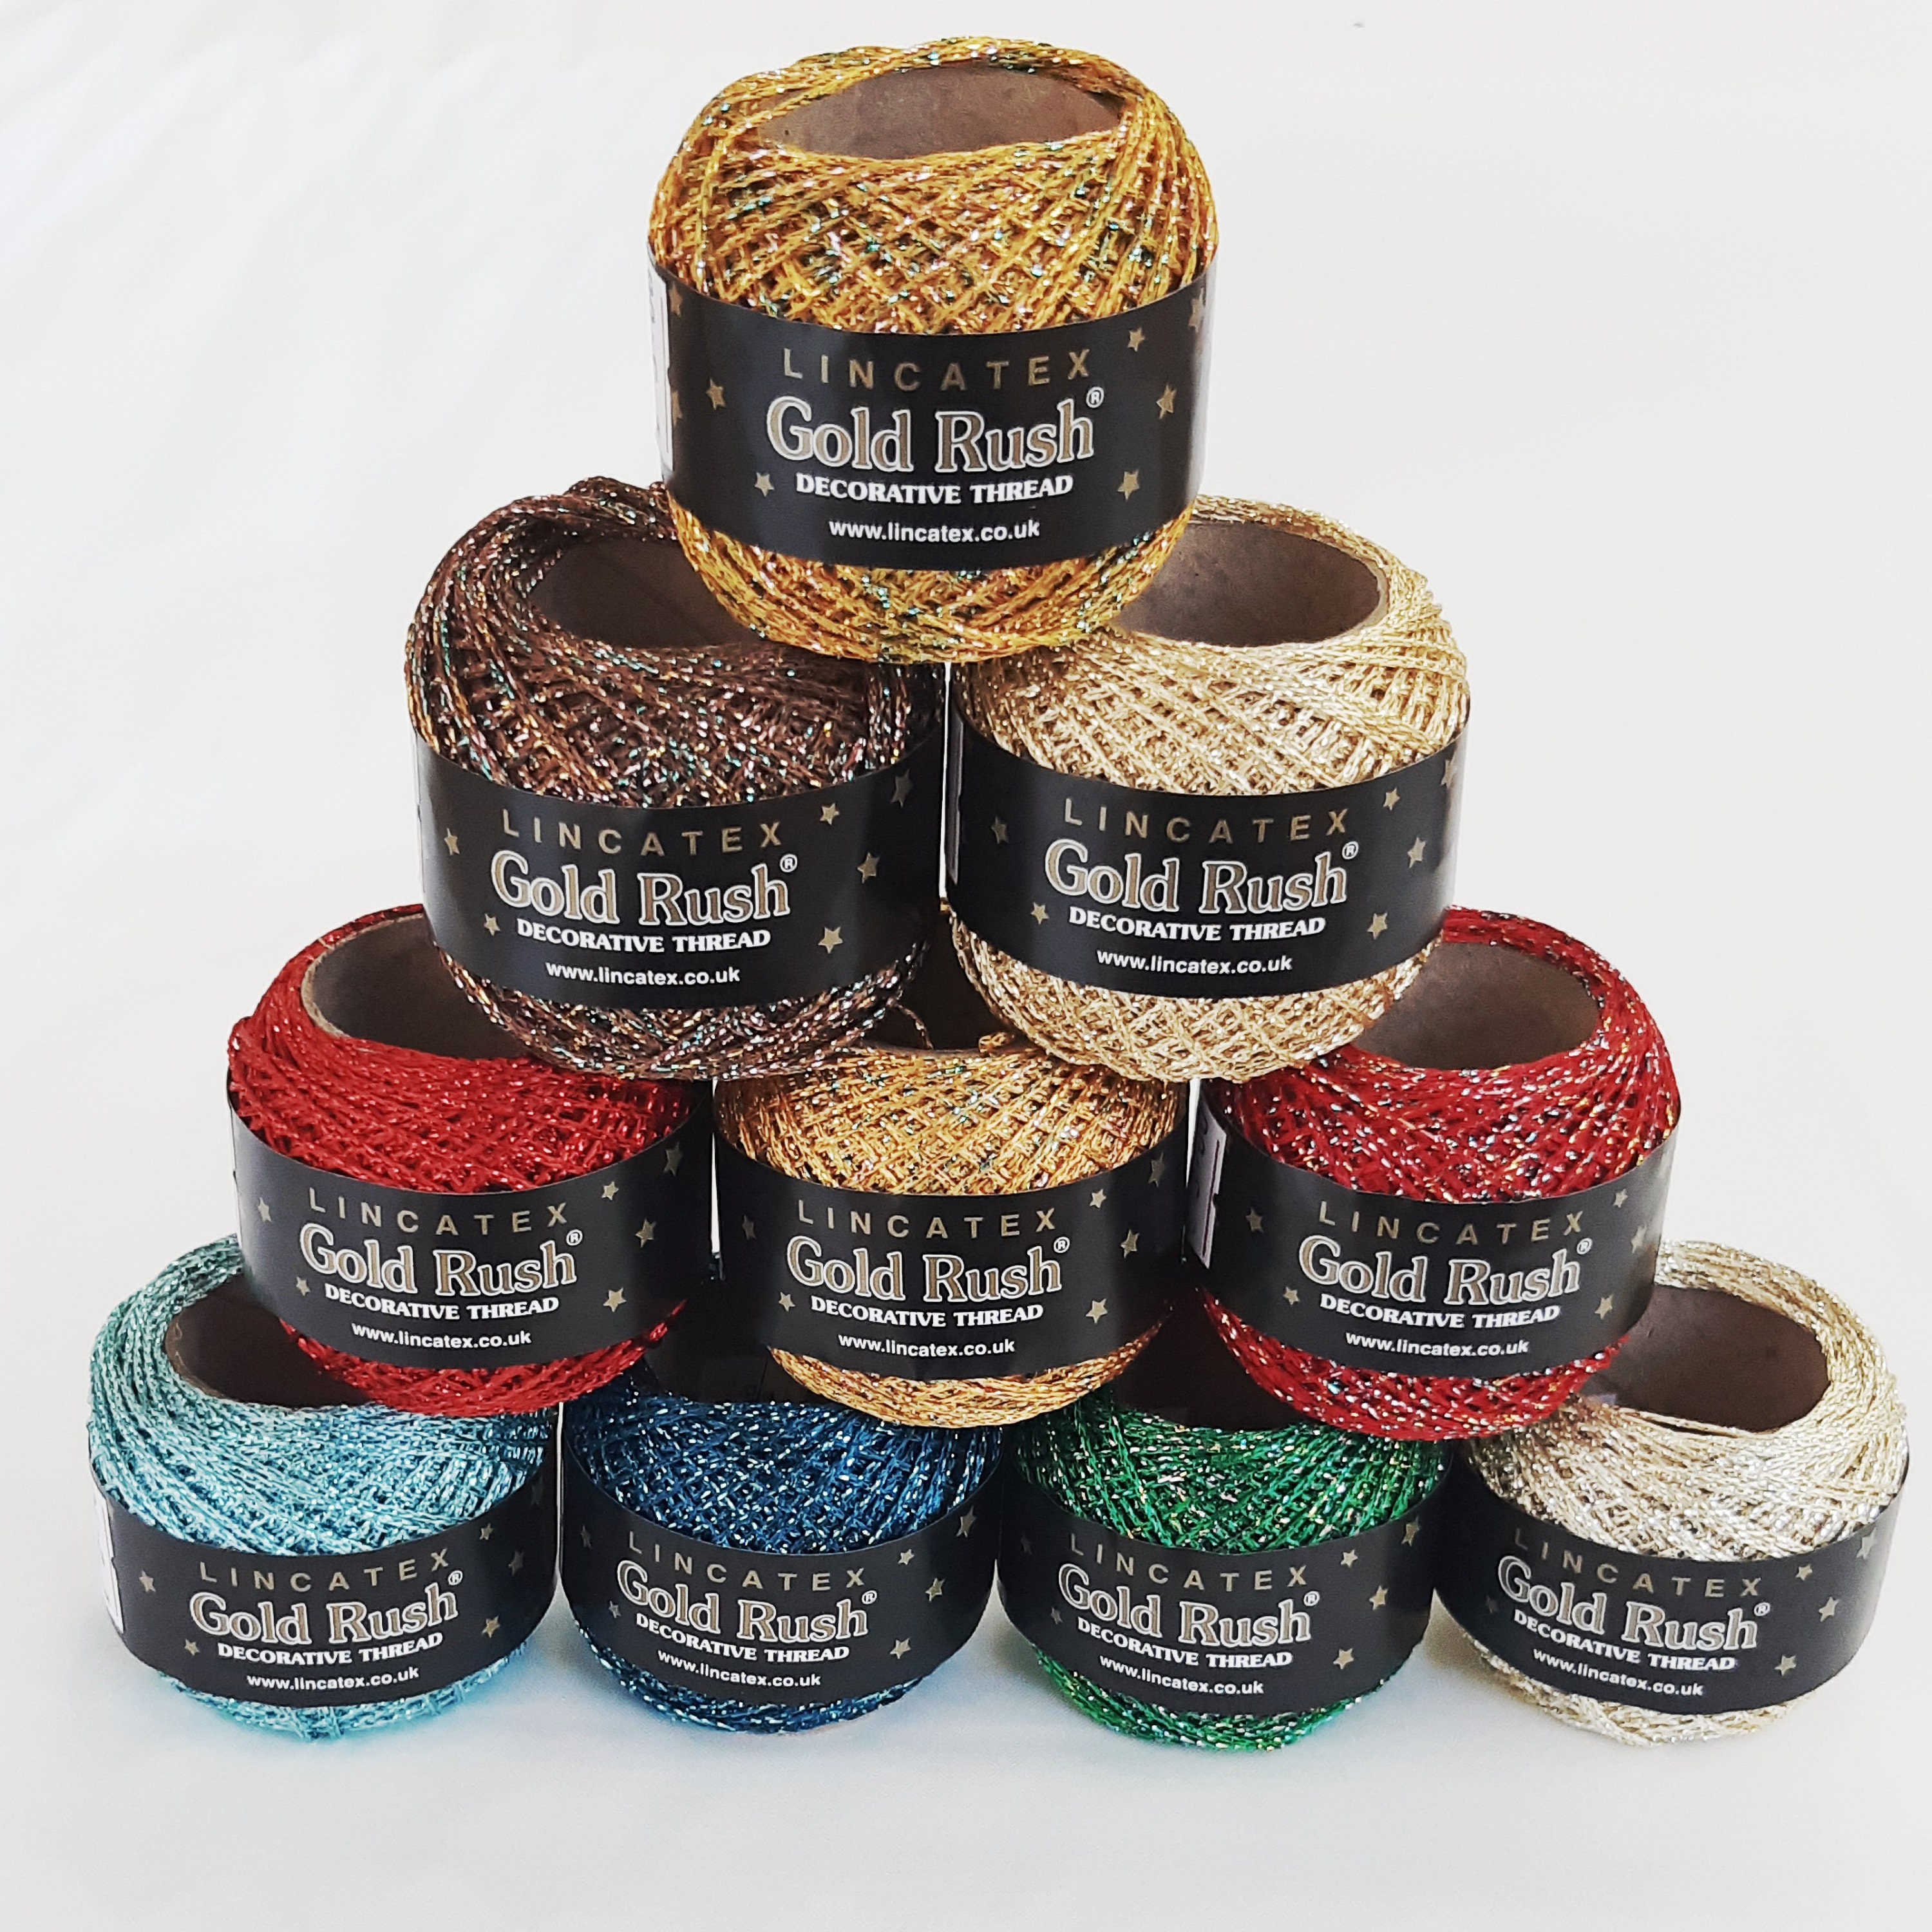 Gold Rush Goldfingering Metallic Yarn - Knitting 20g 4 Etsy Crochet Ply Lincatex